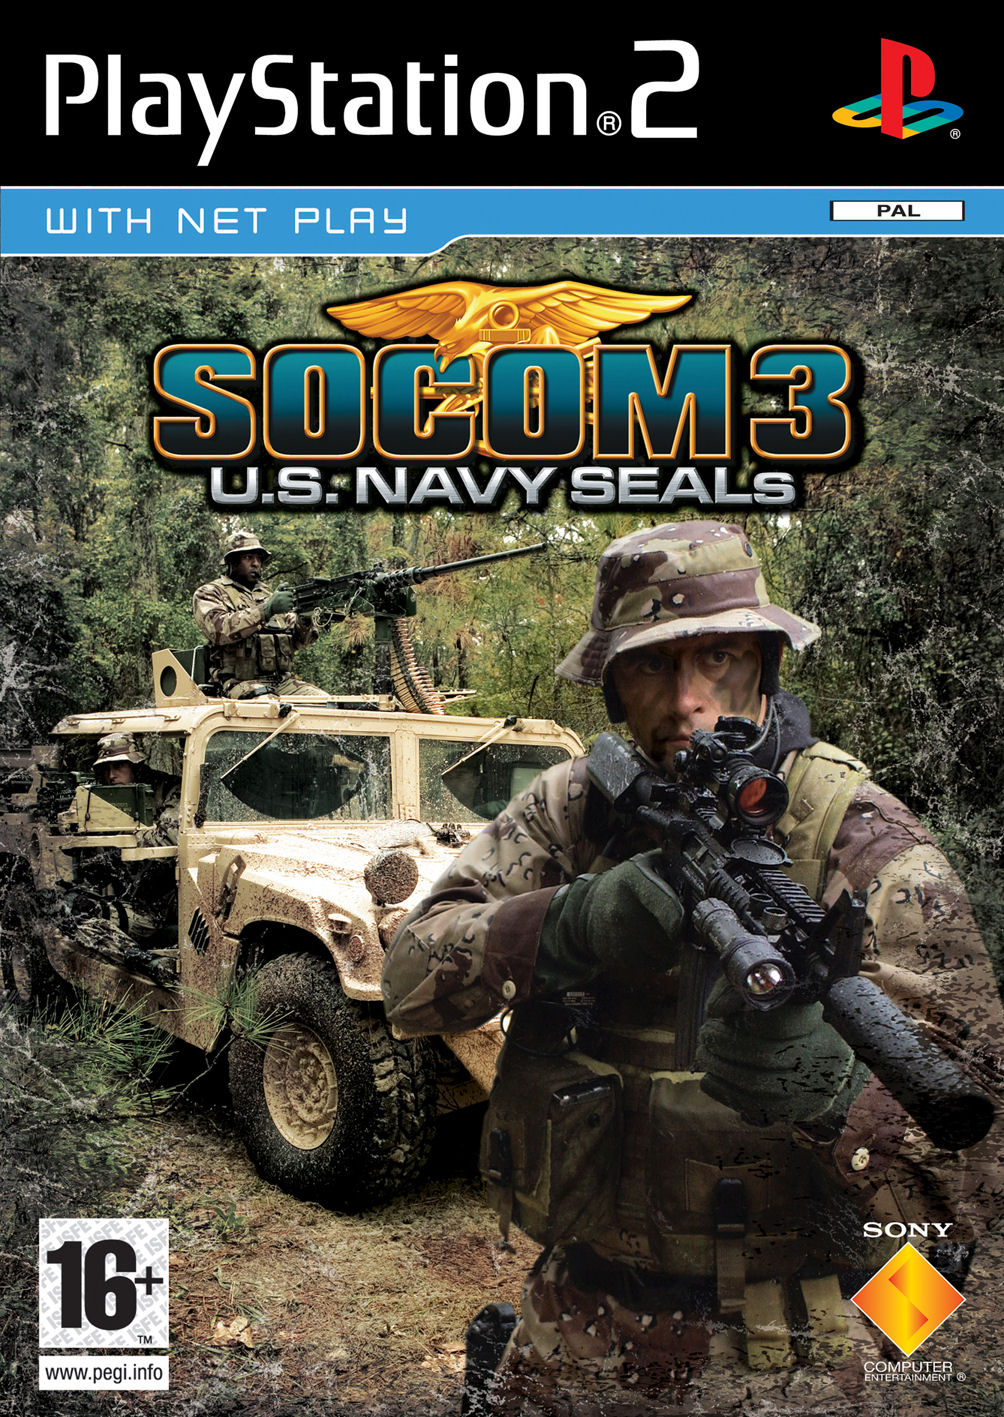 SOCOM: U.S. Navy SEALs Fireteam Bravo 2 [Gameplay] - IGN